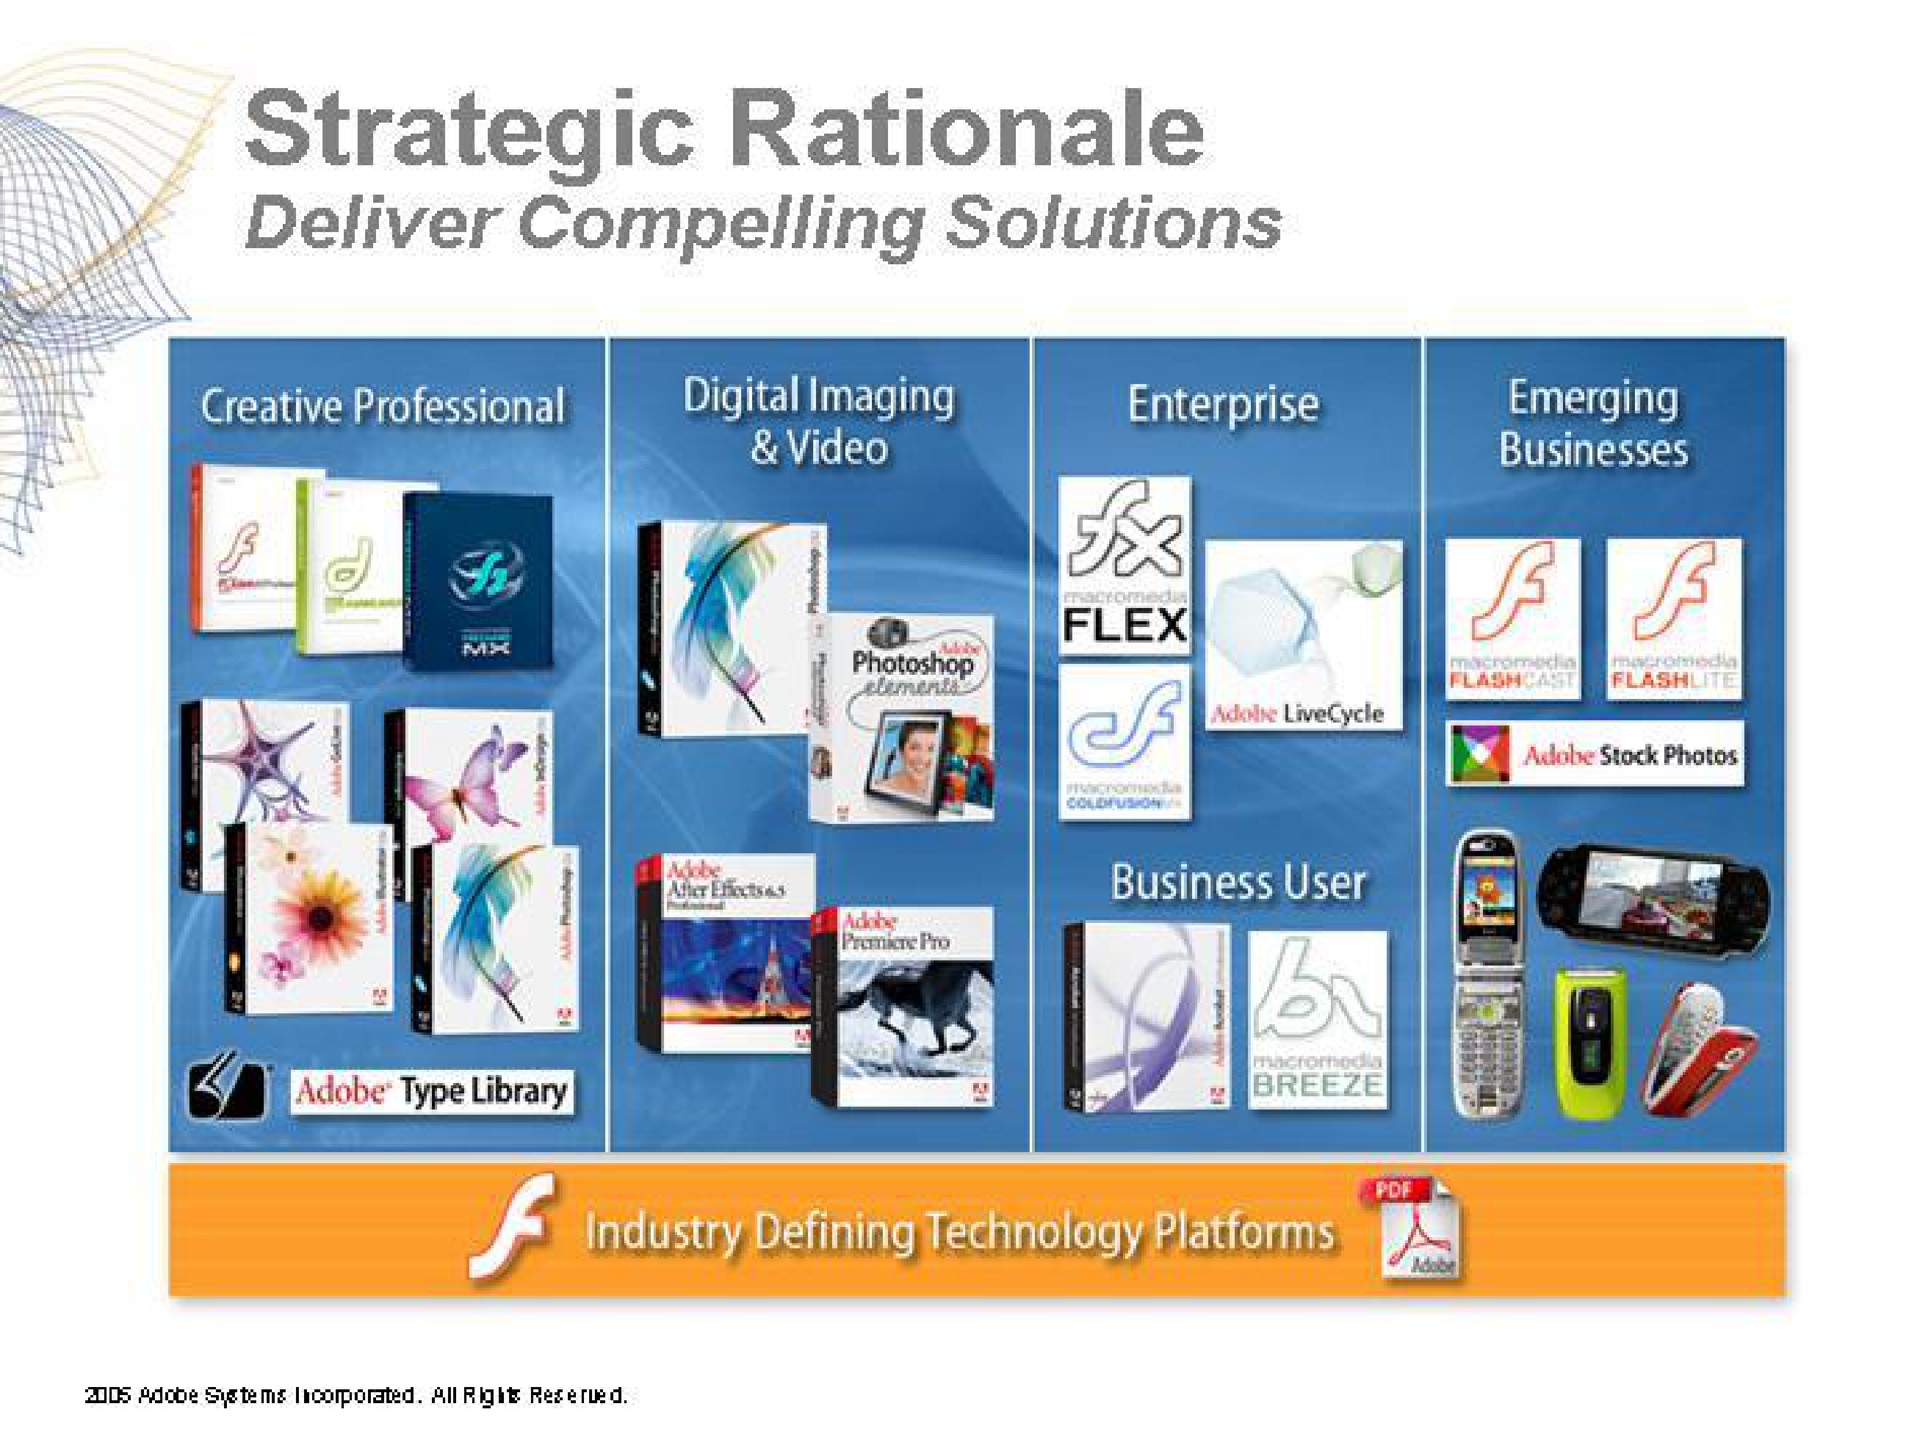 strategic rationale | Adobe